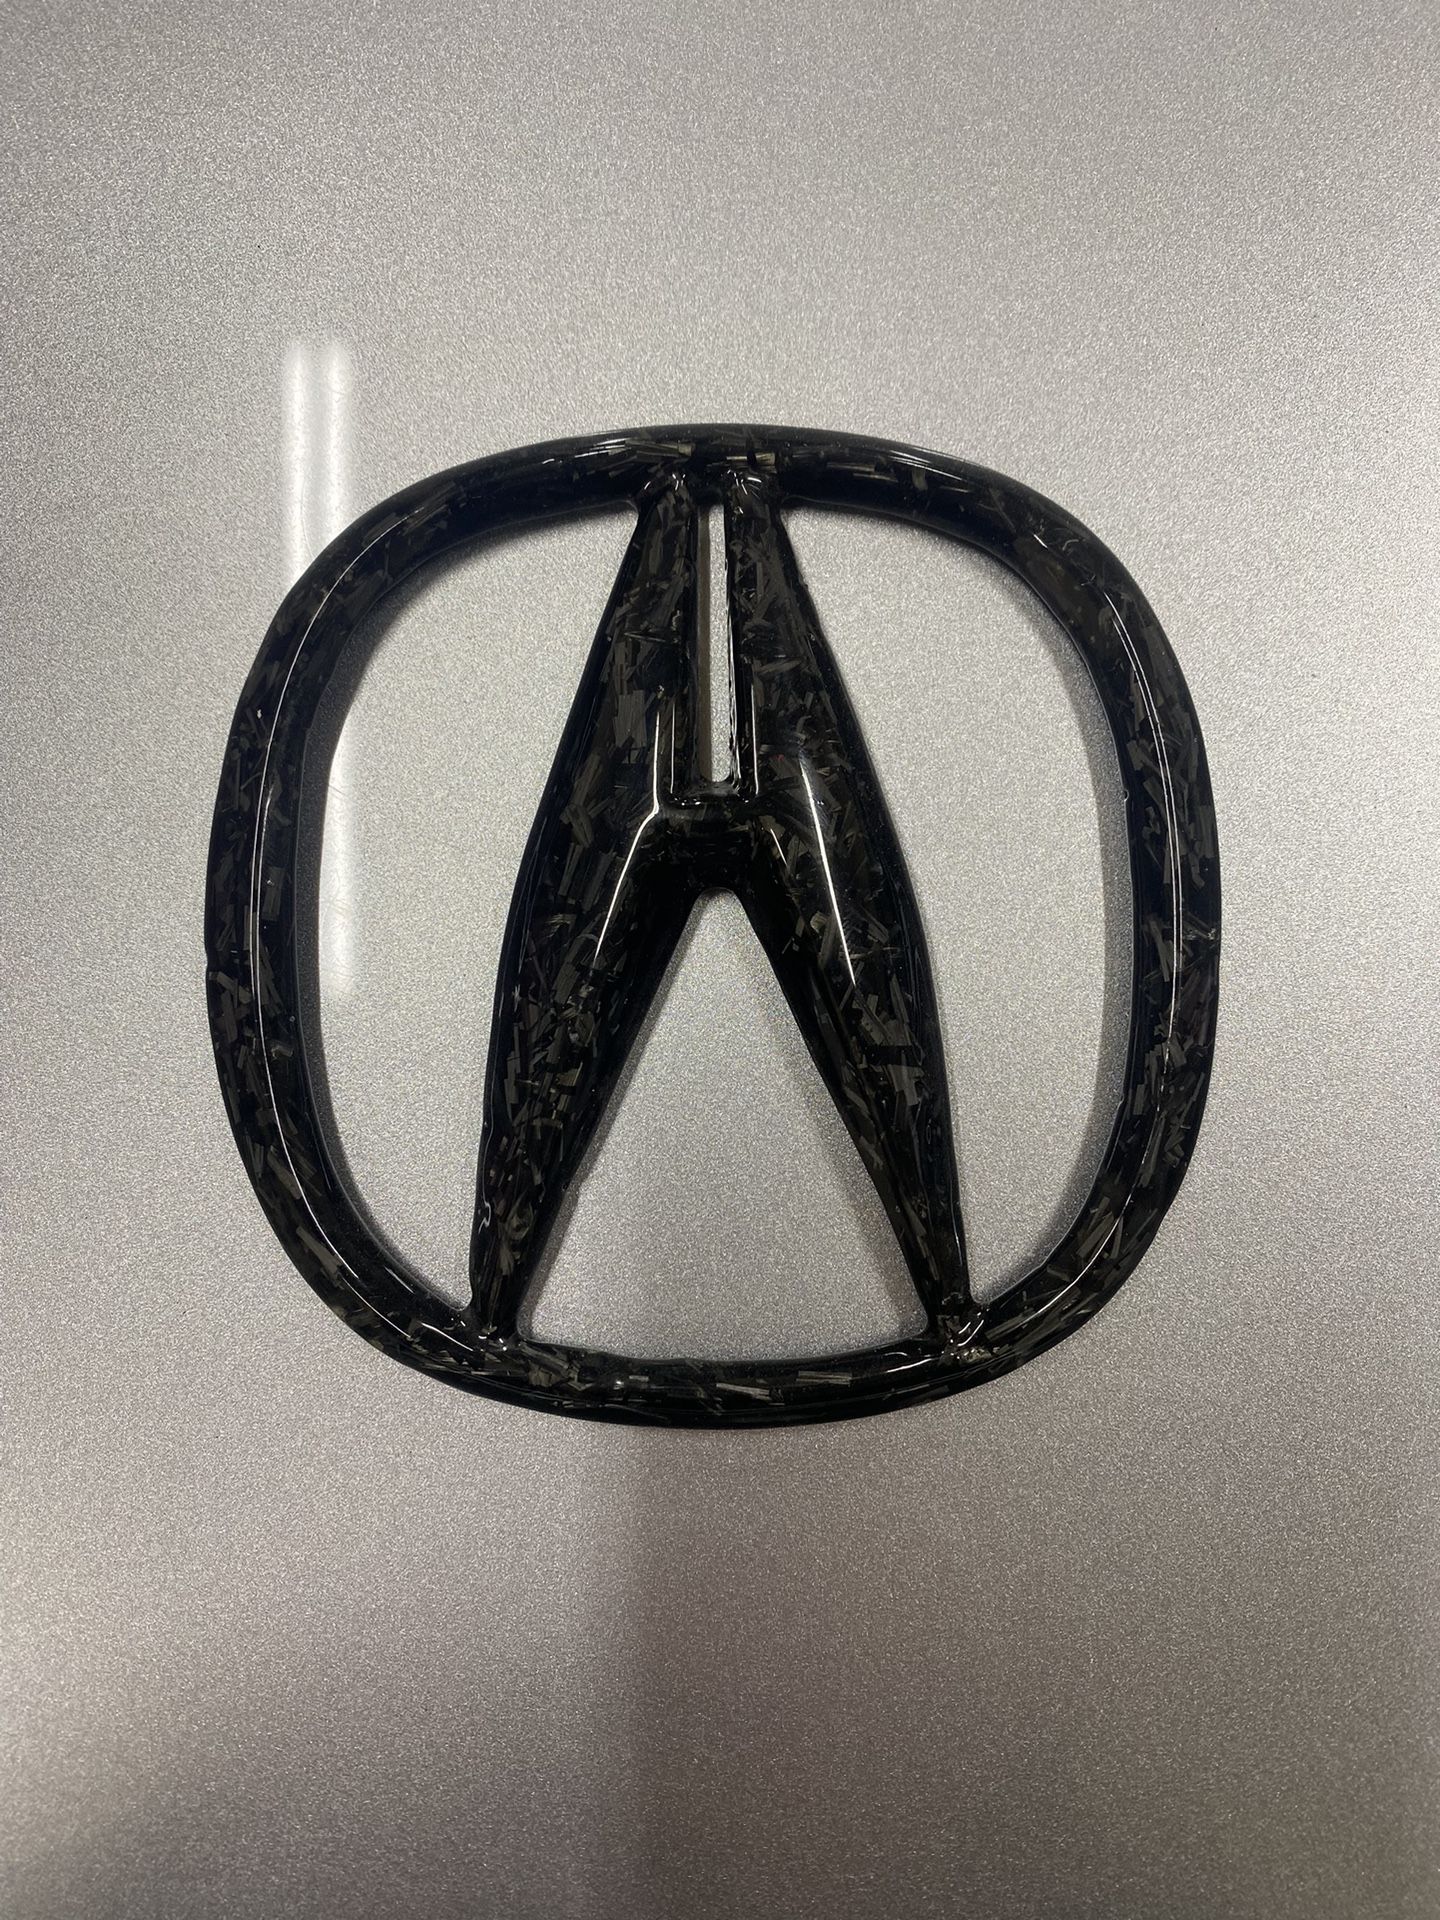 Acura TL Forged Carbon Fiber Front Emblem